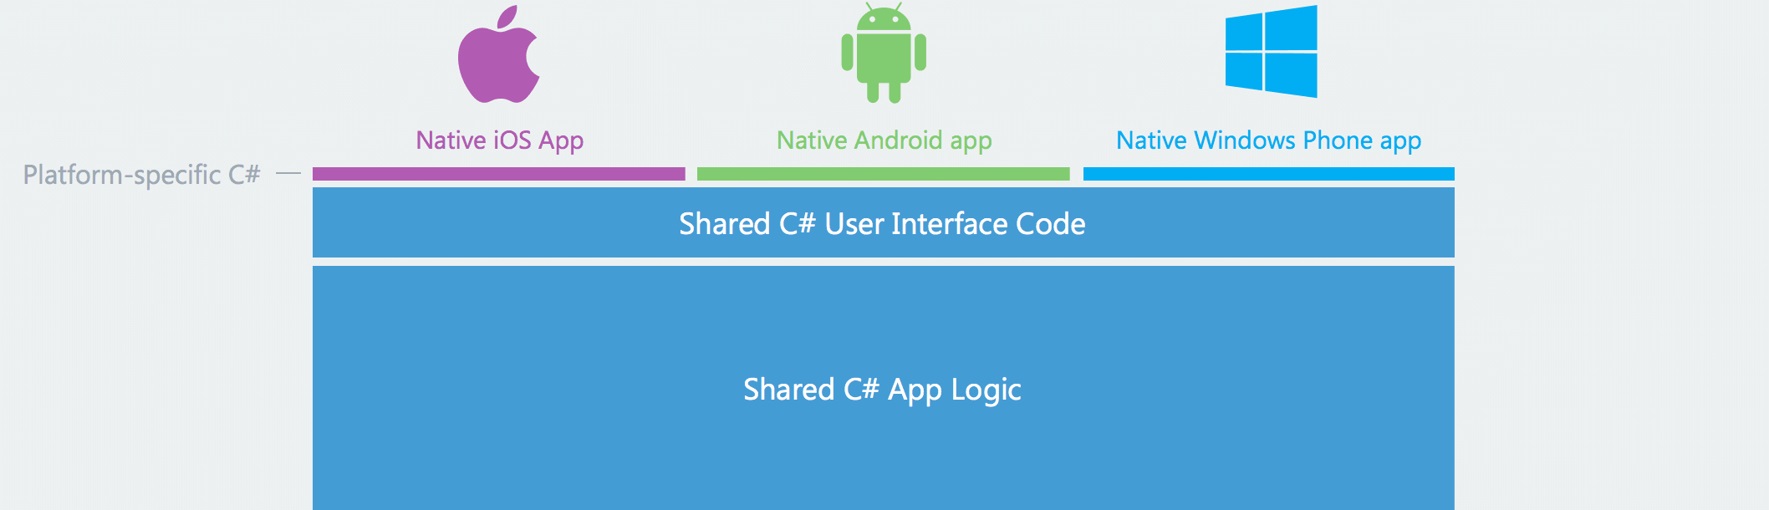 Cross-platform Native Mobile App Development using Xamarin